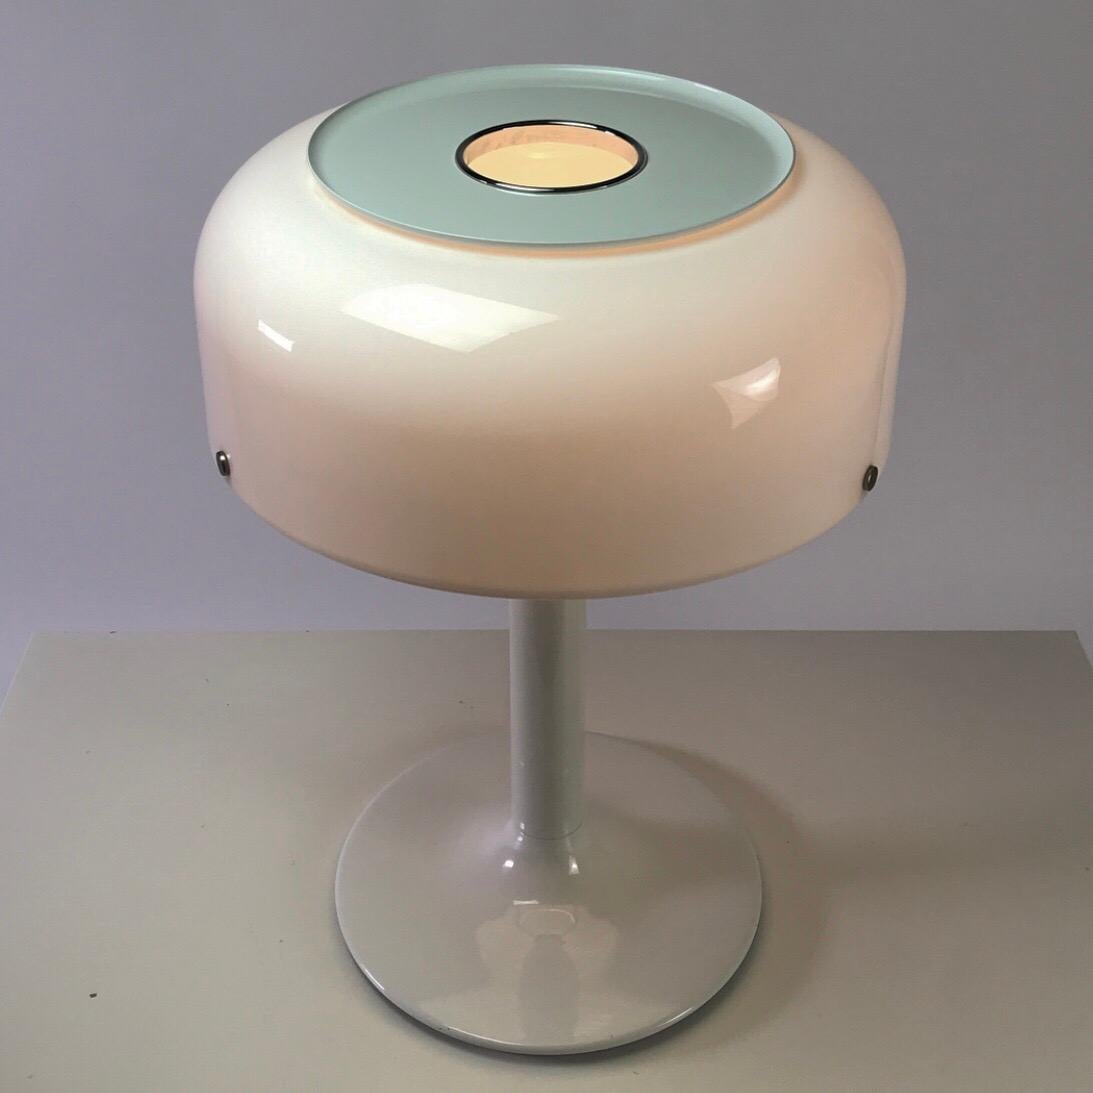 Scandinavian Modern Anders Pehrson Table Lamp Knubbling by Ateljé Lyktan, Sweden 1966